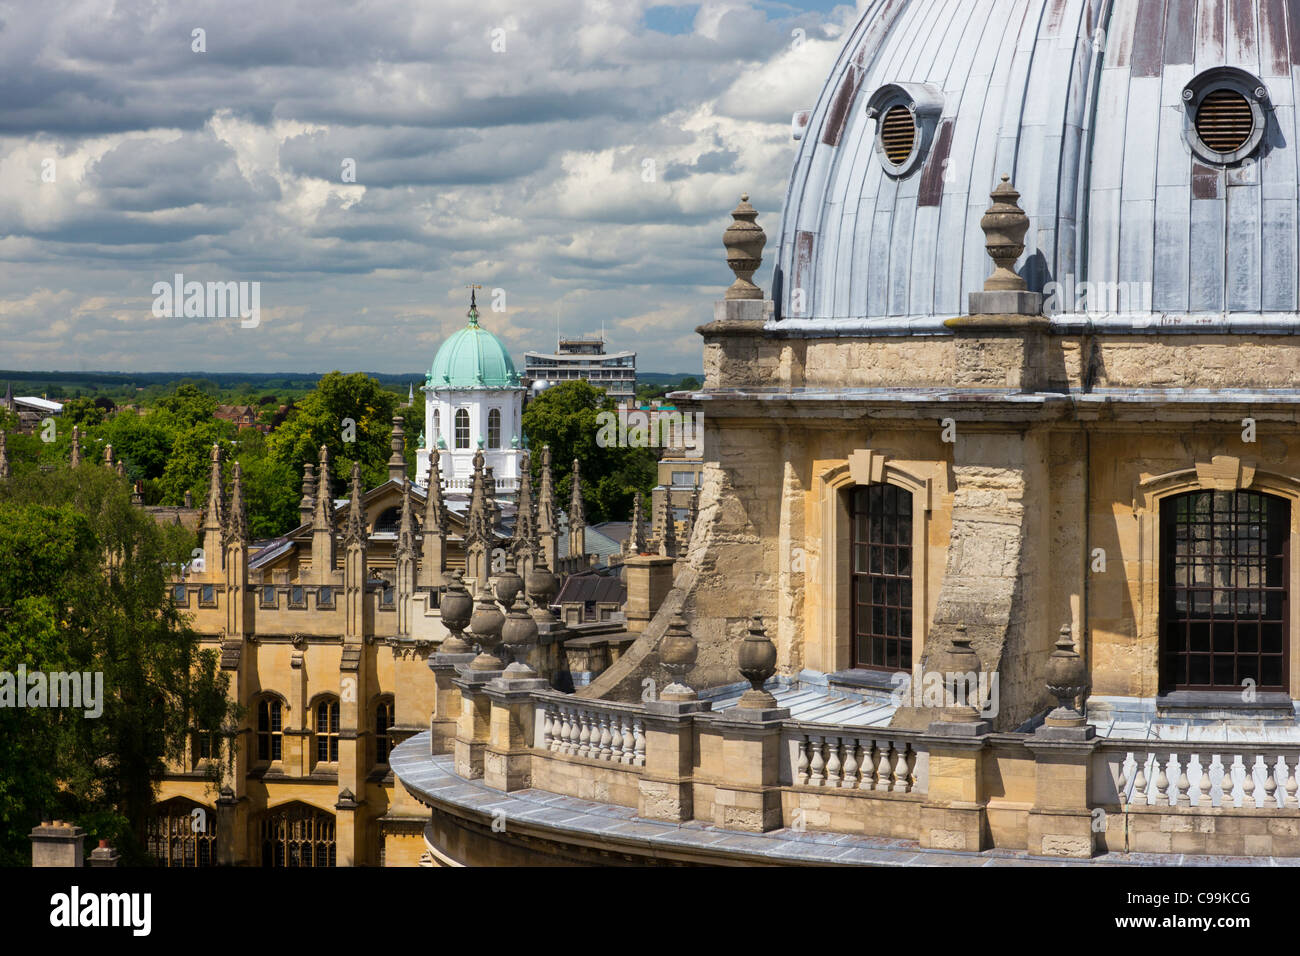 Radcliffe Camera, Oxford, Oxfordshire, England, UK Banque D'Images